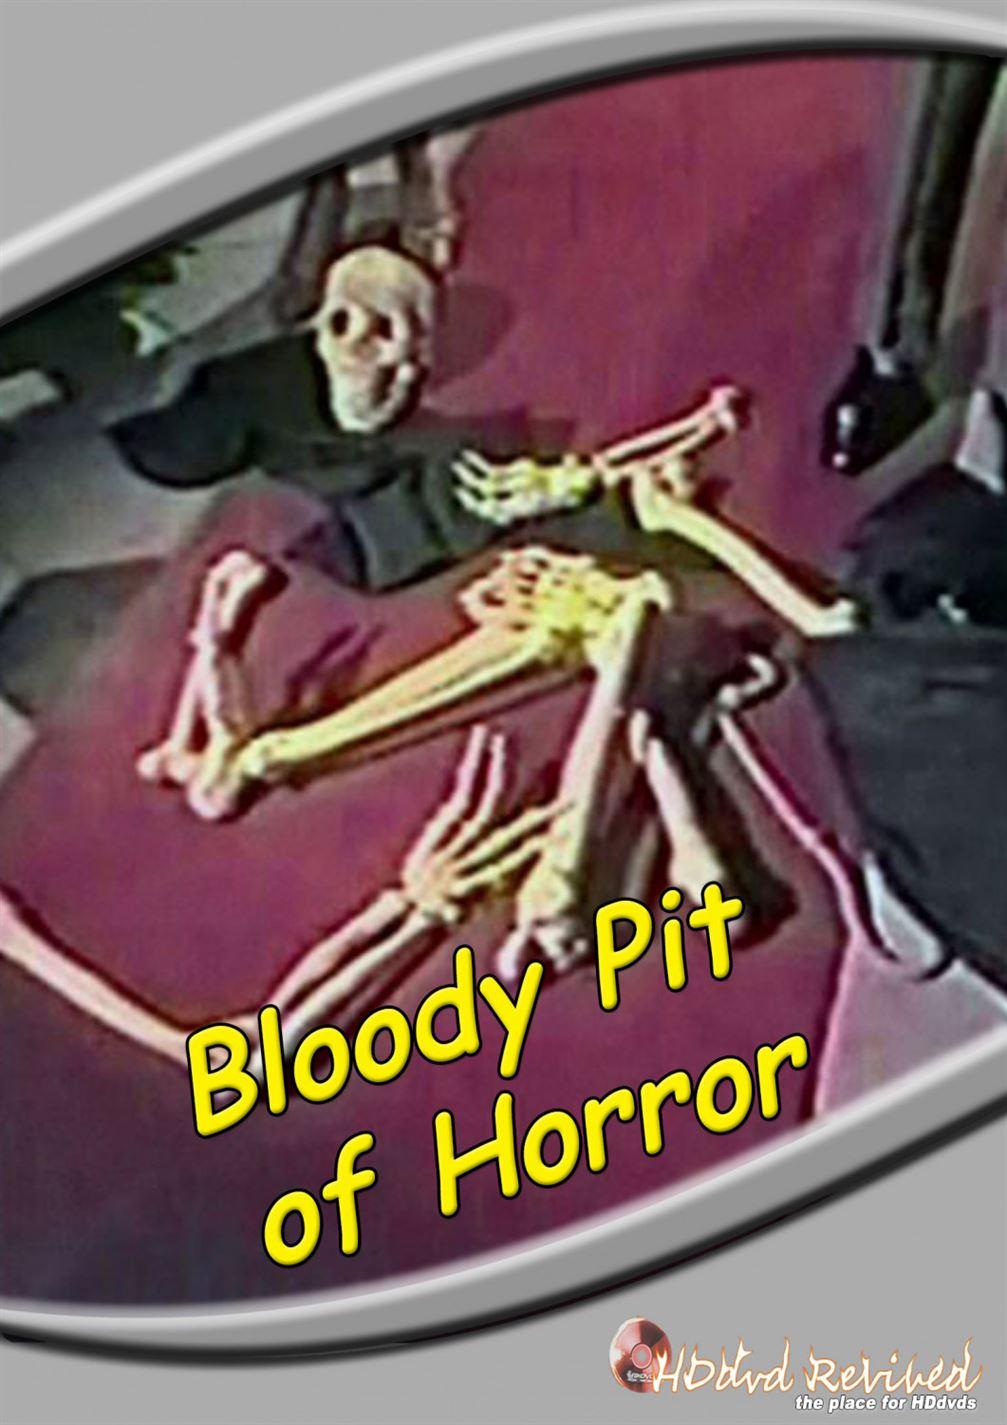 Bloody Pit of Horror (1965) Standard DVD (HDDVD-Revived) UK Seller